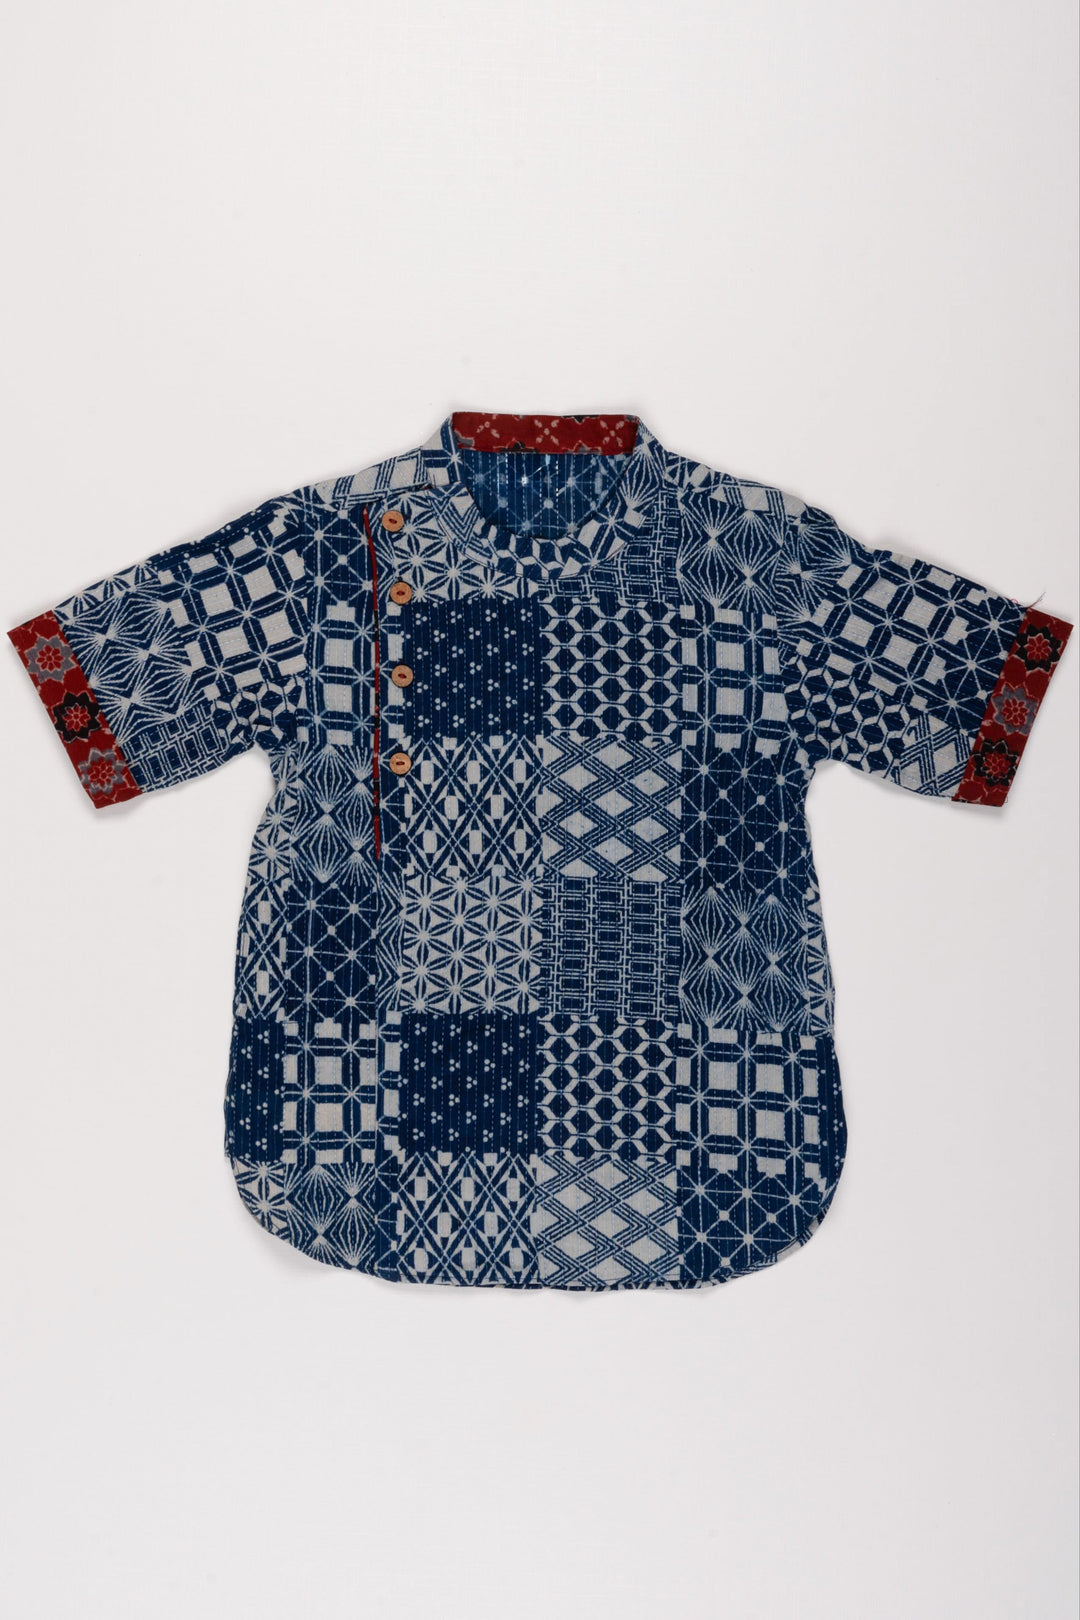 The Nesavu Boys Kurtha Shirt Boys Intricate Geometric Patterned Blue Cotton Shirt with Contrasting Cuff Detail Nesavu 16 (1Y) / Blue / Cotton BS117A-16 Elegant and Stylish Boys Kurta Shirts | Festive and Casual Options Available | The Nesavu